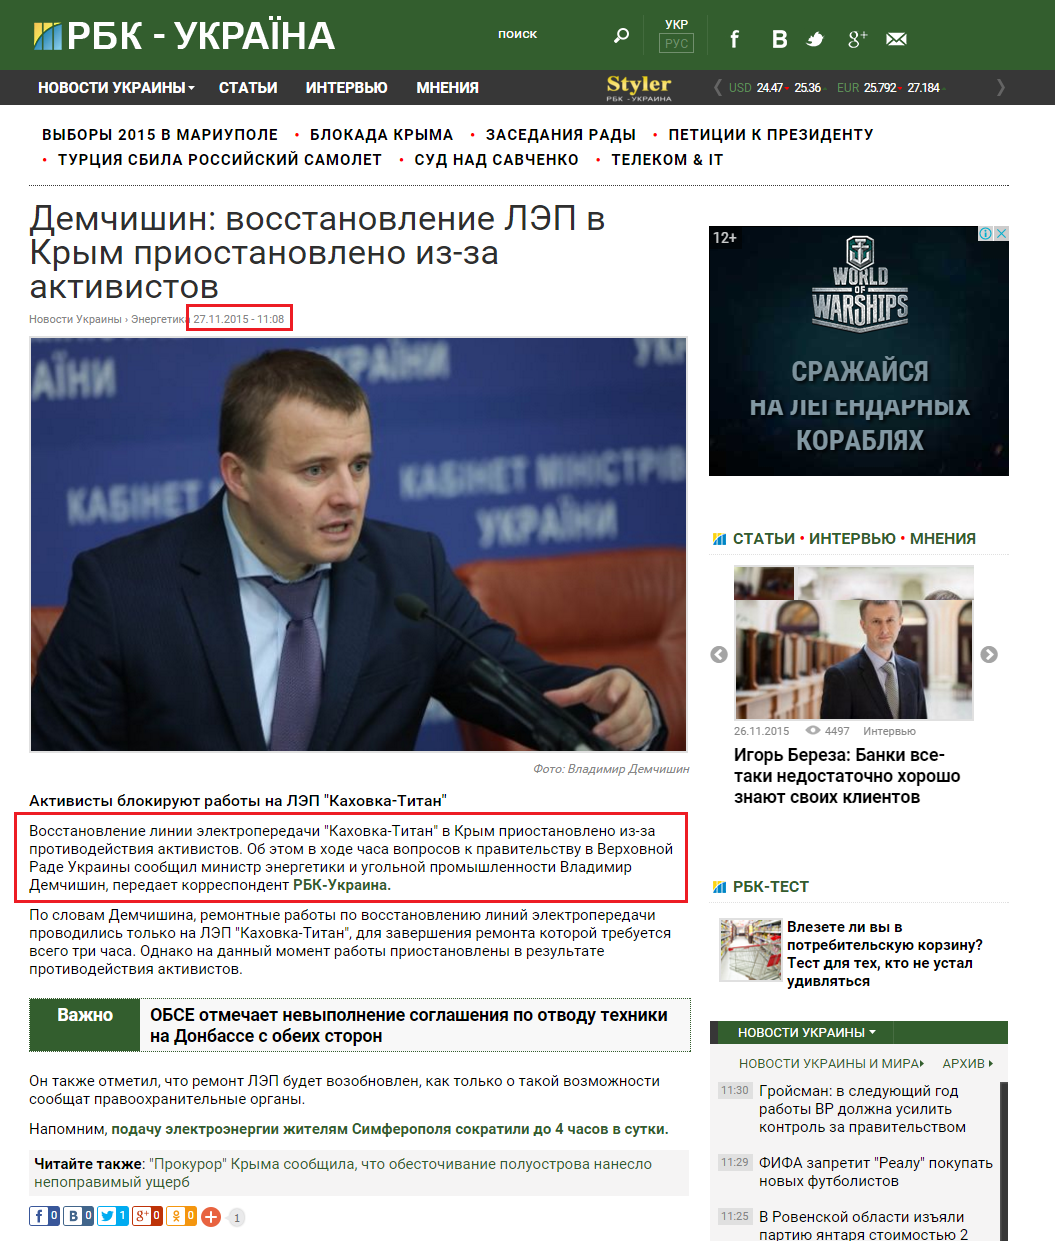 http://www.rbc.ua/rus/news/demchishin-vosstanovlenie-lep-krym-priostanovleno-1448615140.html